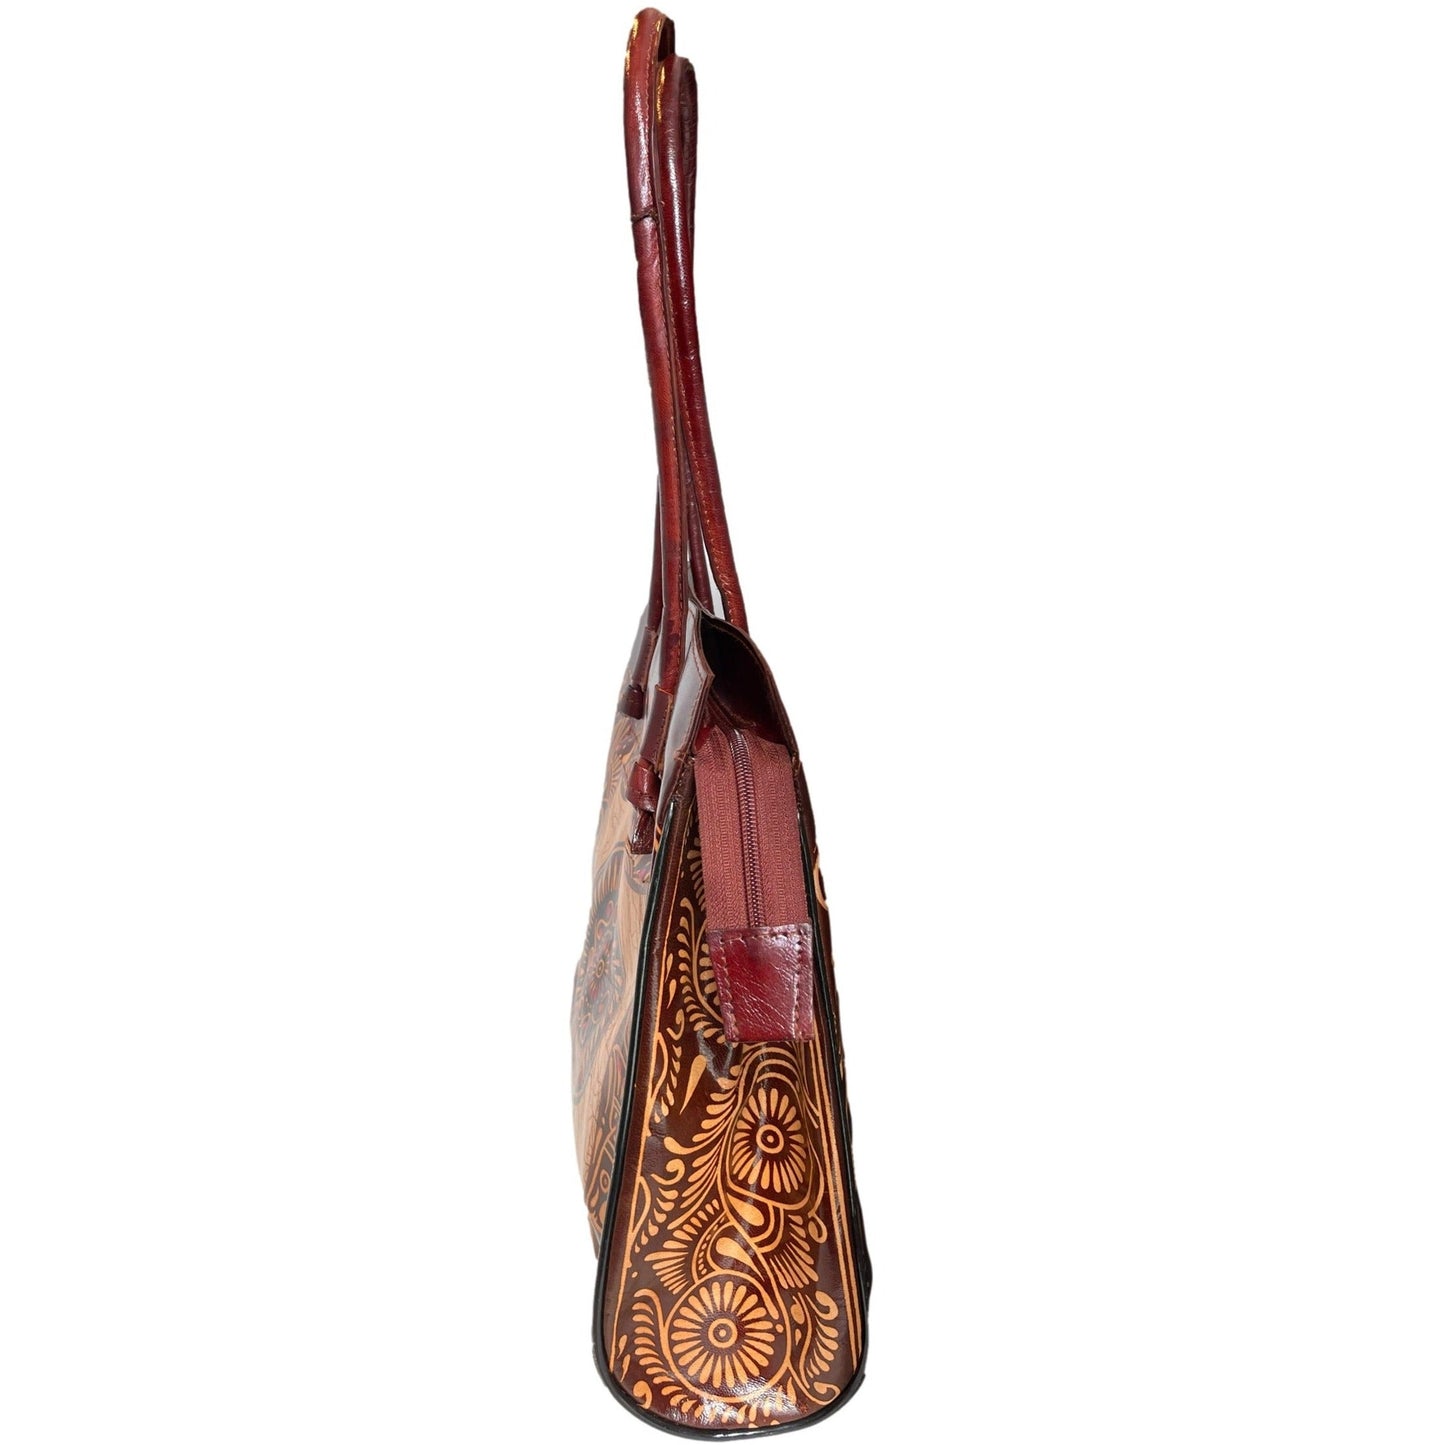 Shantiniketan Genuine Leather Tote Purse with Design